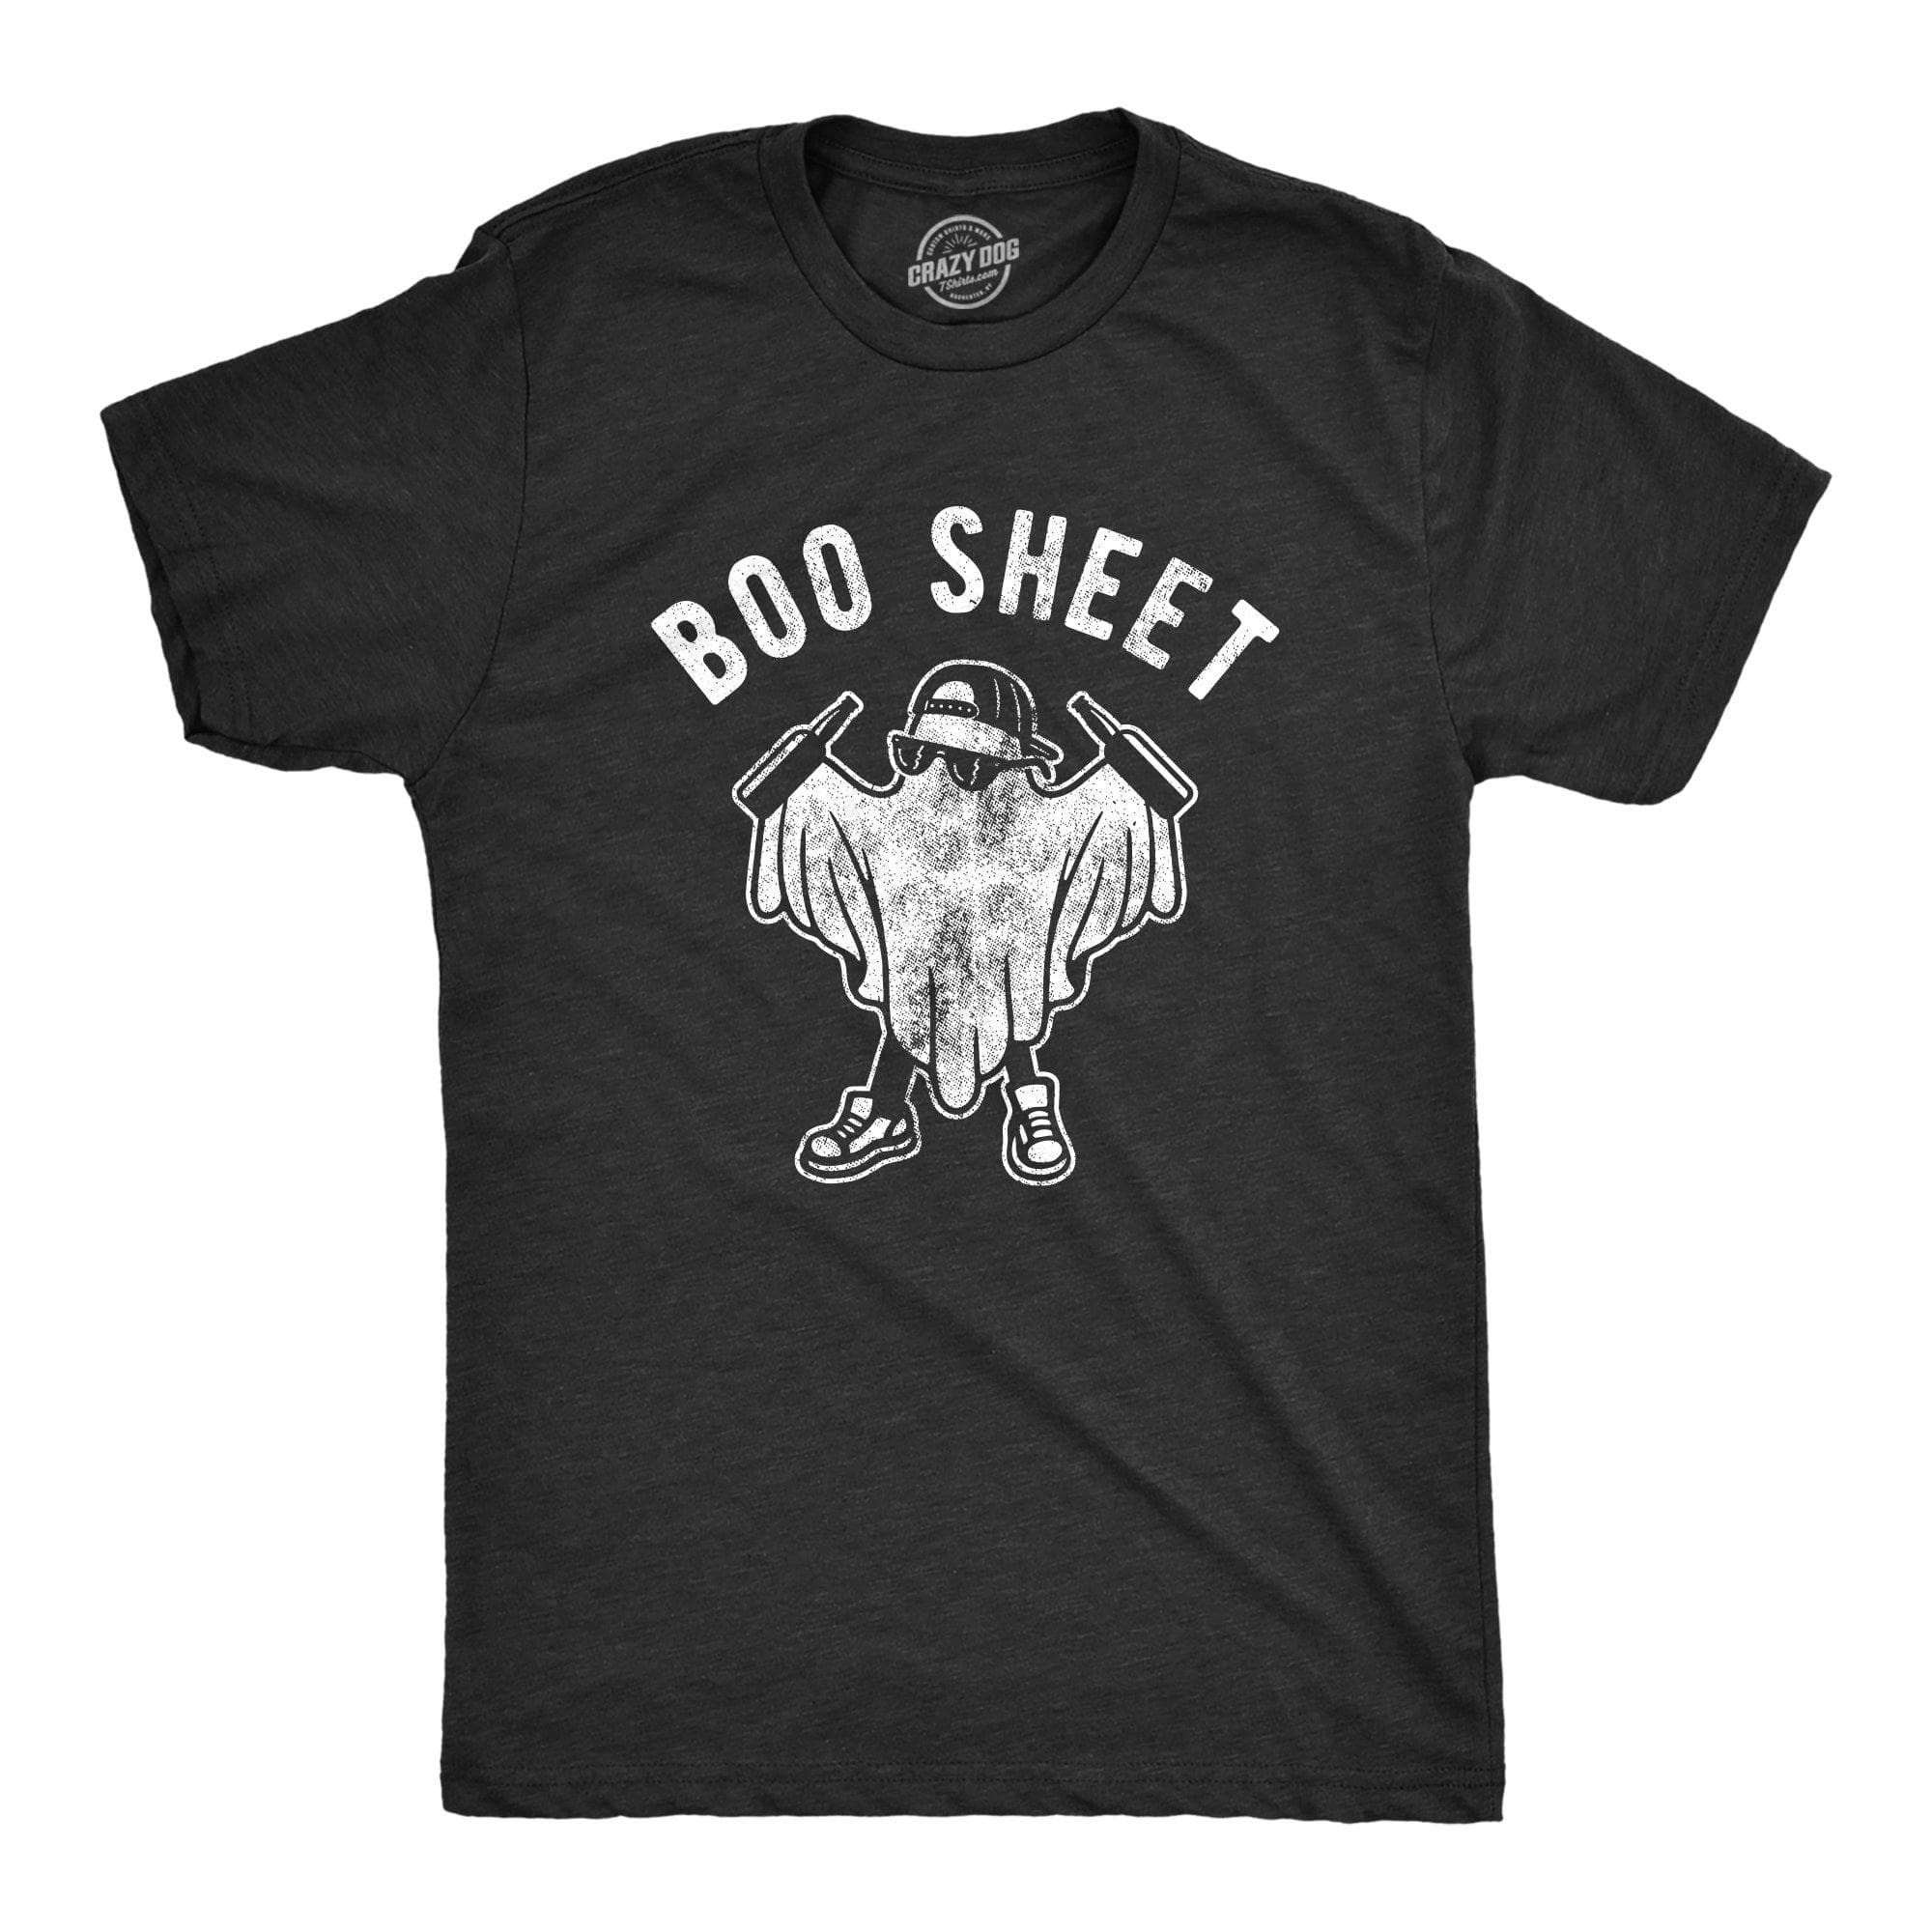 Boo Sheet Men's Tshirt - Crazy Dog T-Shirts